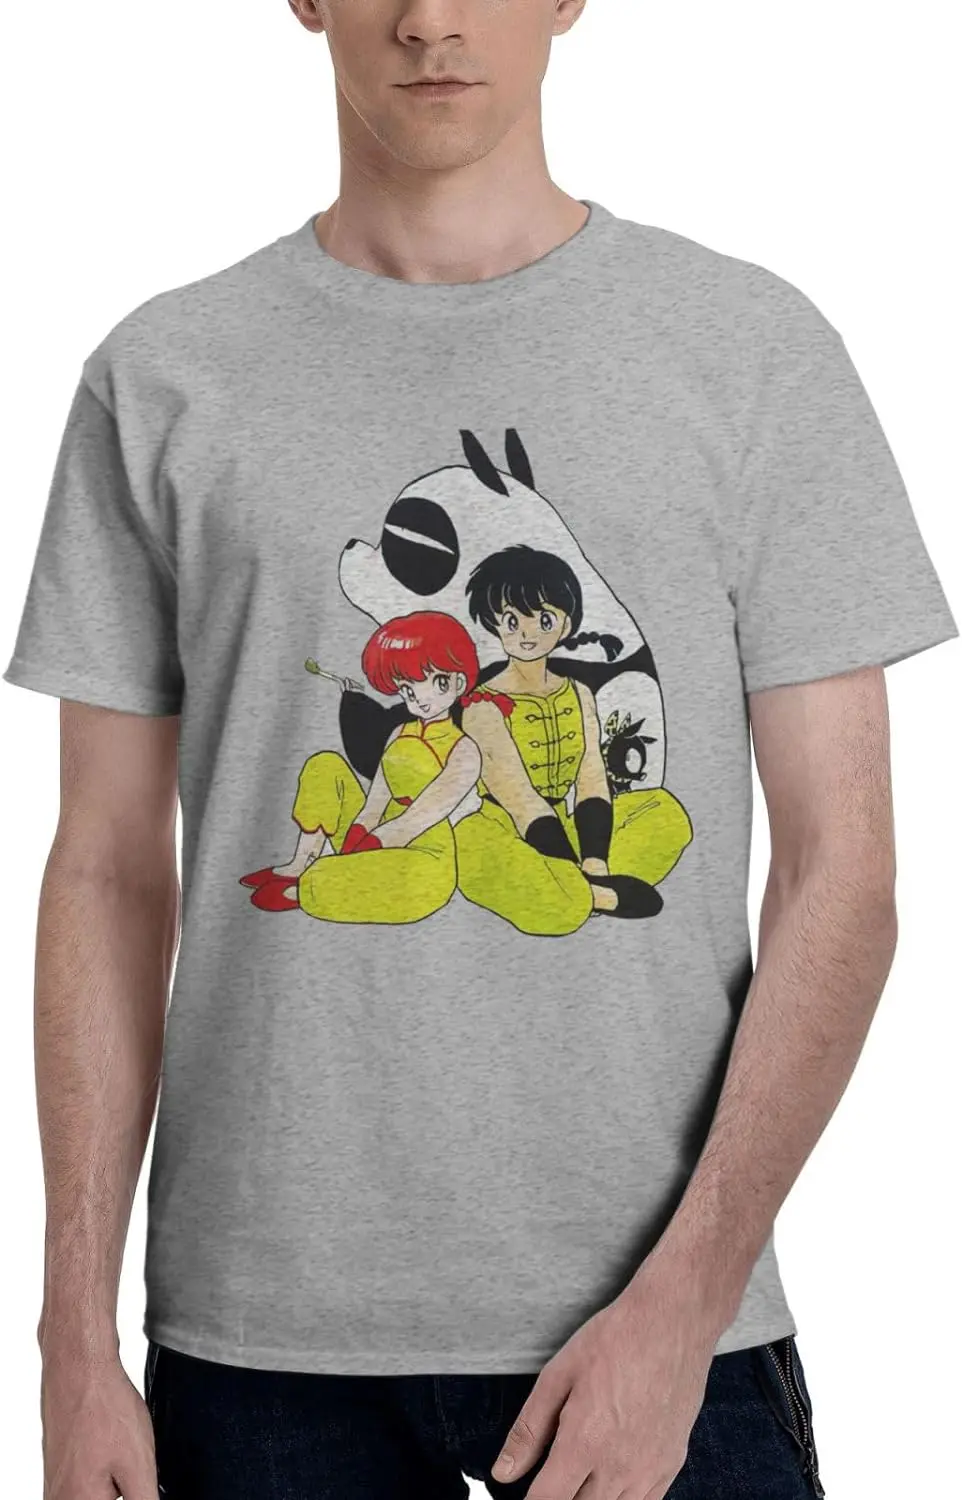 

Anime Ranma ½ Shirt Cotton Short Sleeve Cool T-Shirt for Man Black